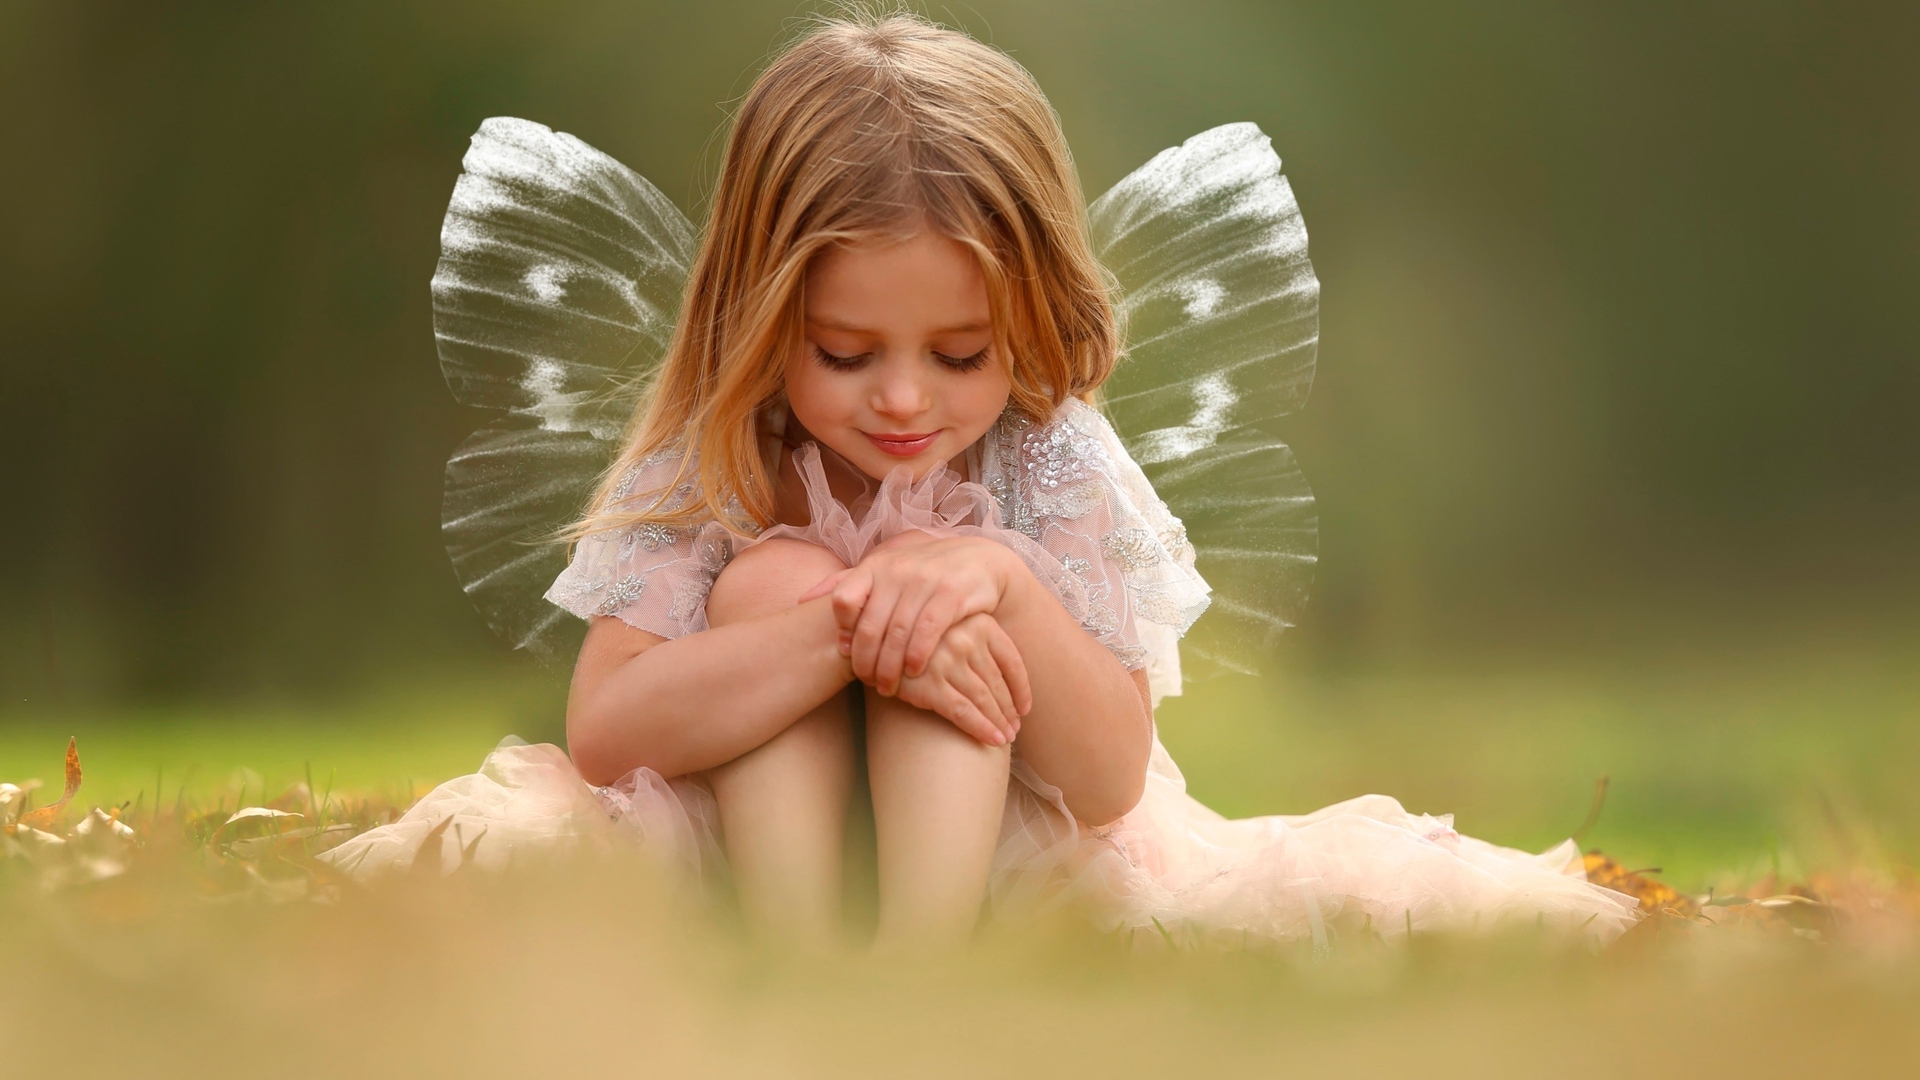 Cute Little Fairy for 1920 x 1080 HDTV 1080p resolution